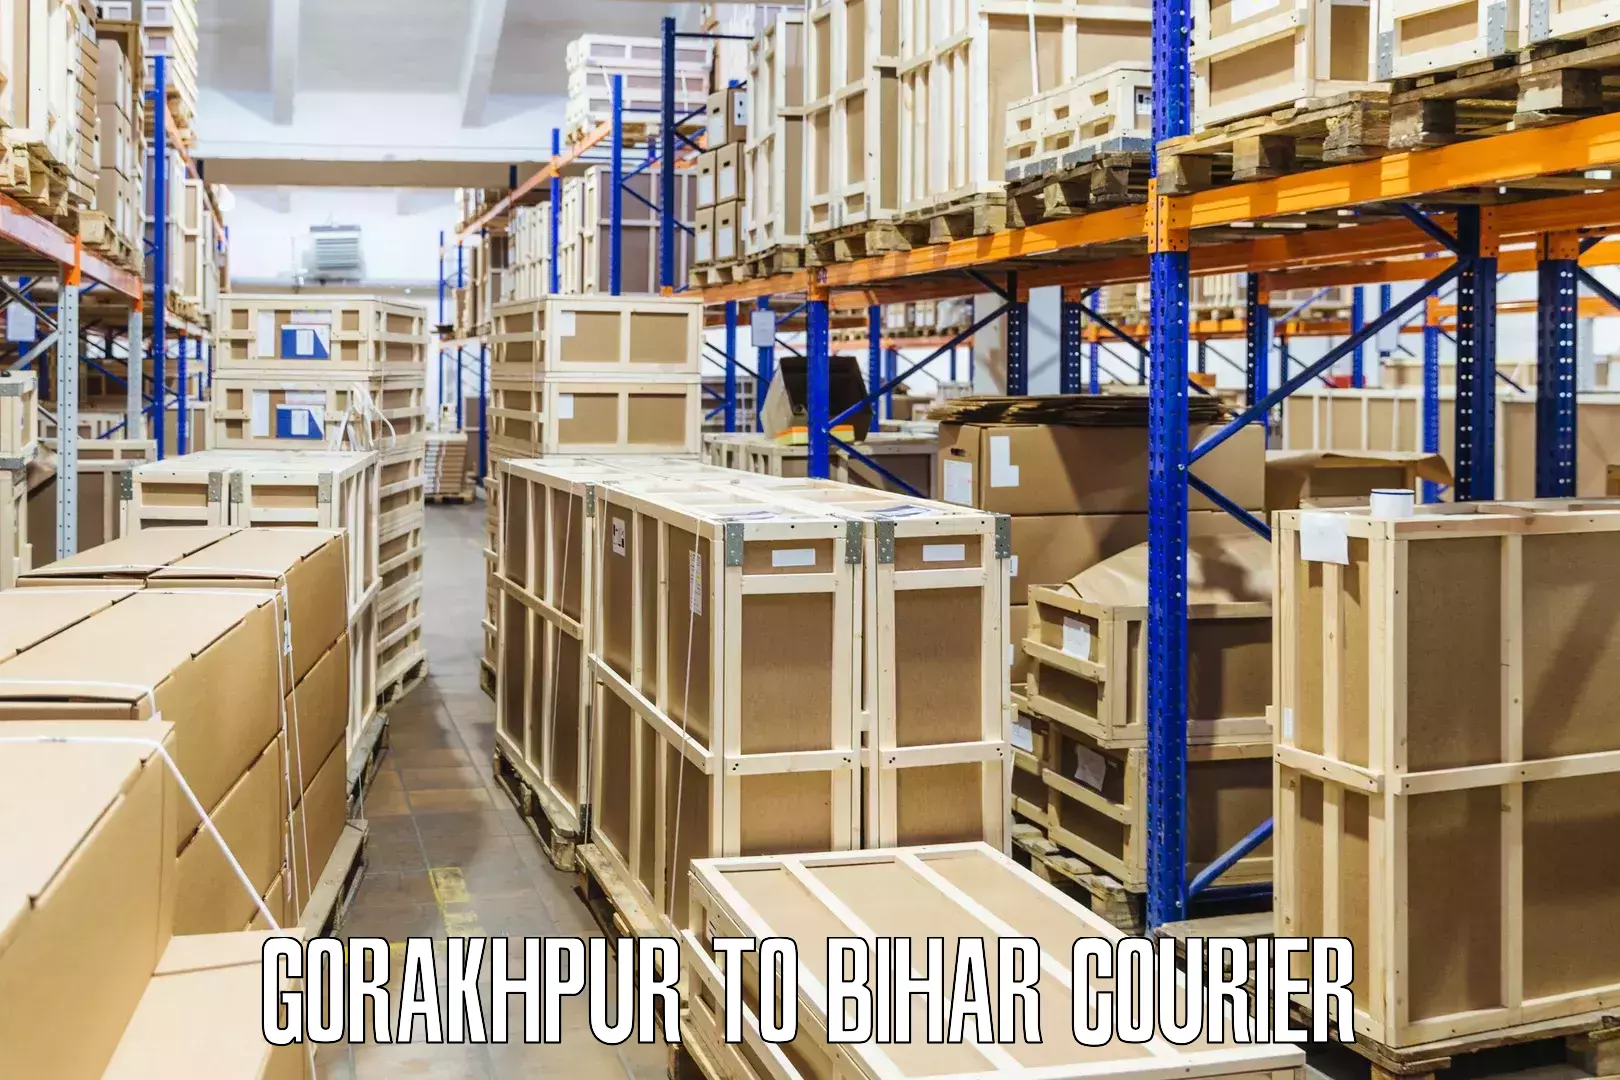 Cost-effective shipping solutions Gorakhpur to Bihar